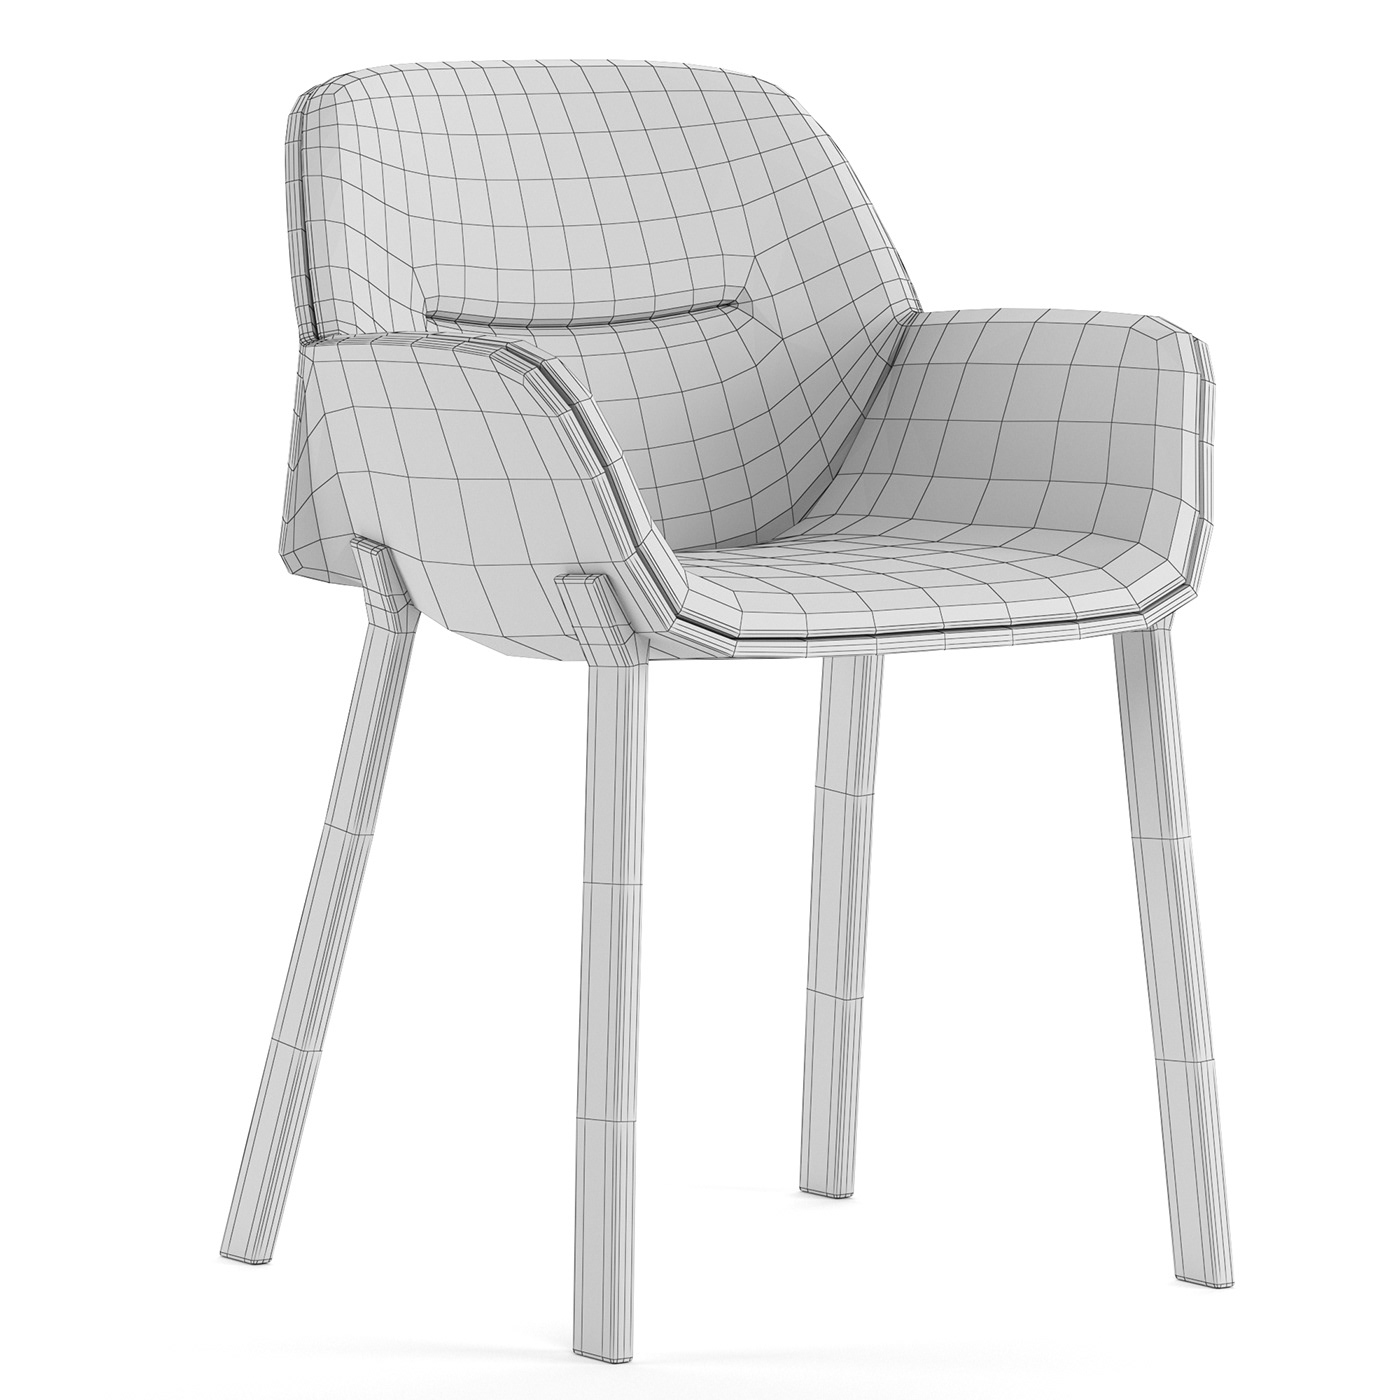 furniture architecture visualization 3ds max modern 3D archviz Render corona